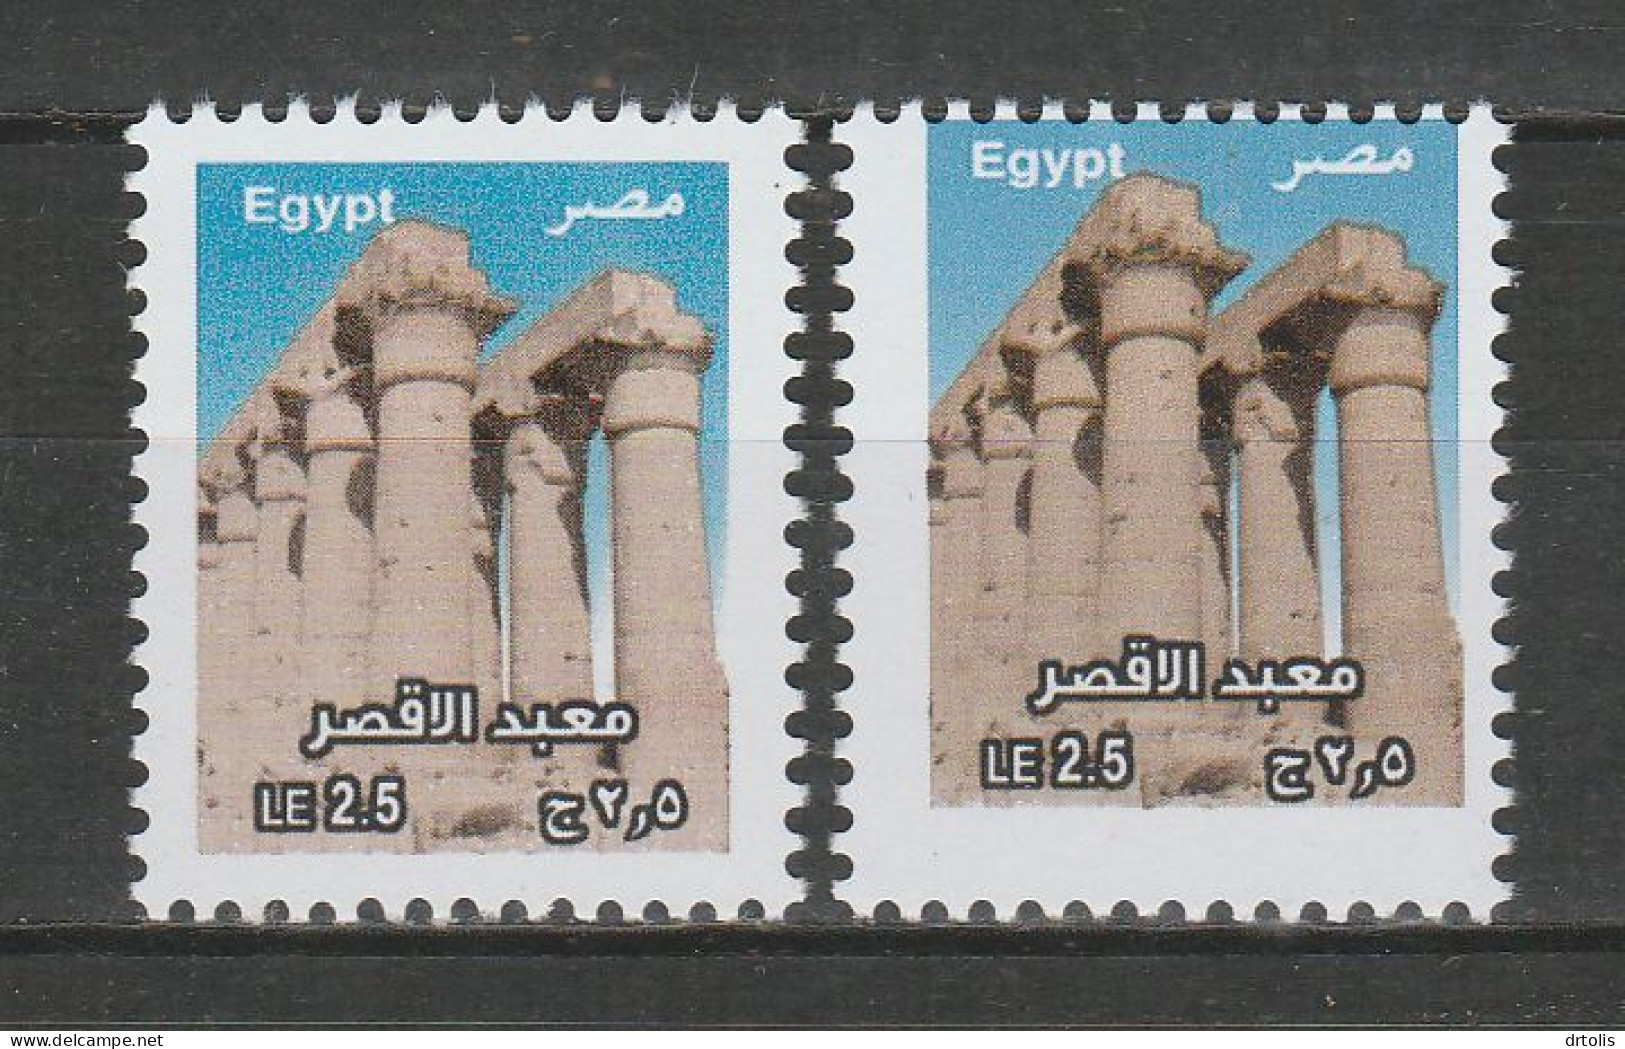 EGYPT / 2018 / PERFORATION ERROR : MASSIVE UPWARD DEVIATION / LUXOR TEMPLE / EGYPTOLOGY / ARCHEOLOGY / MNH / VF - Ongebruikt